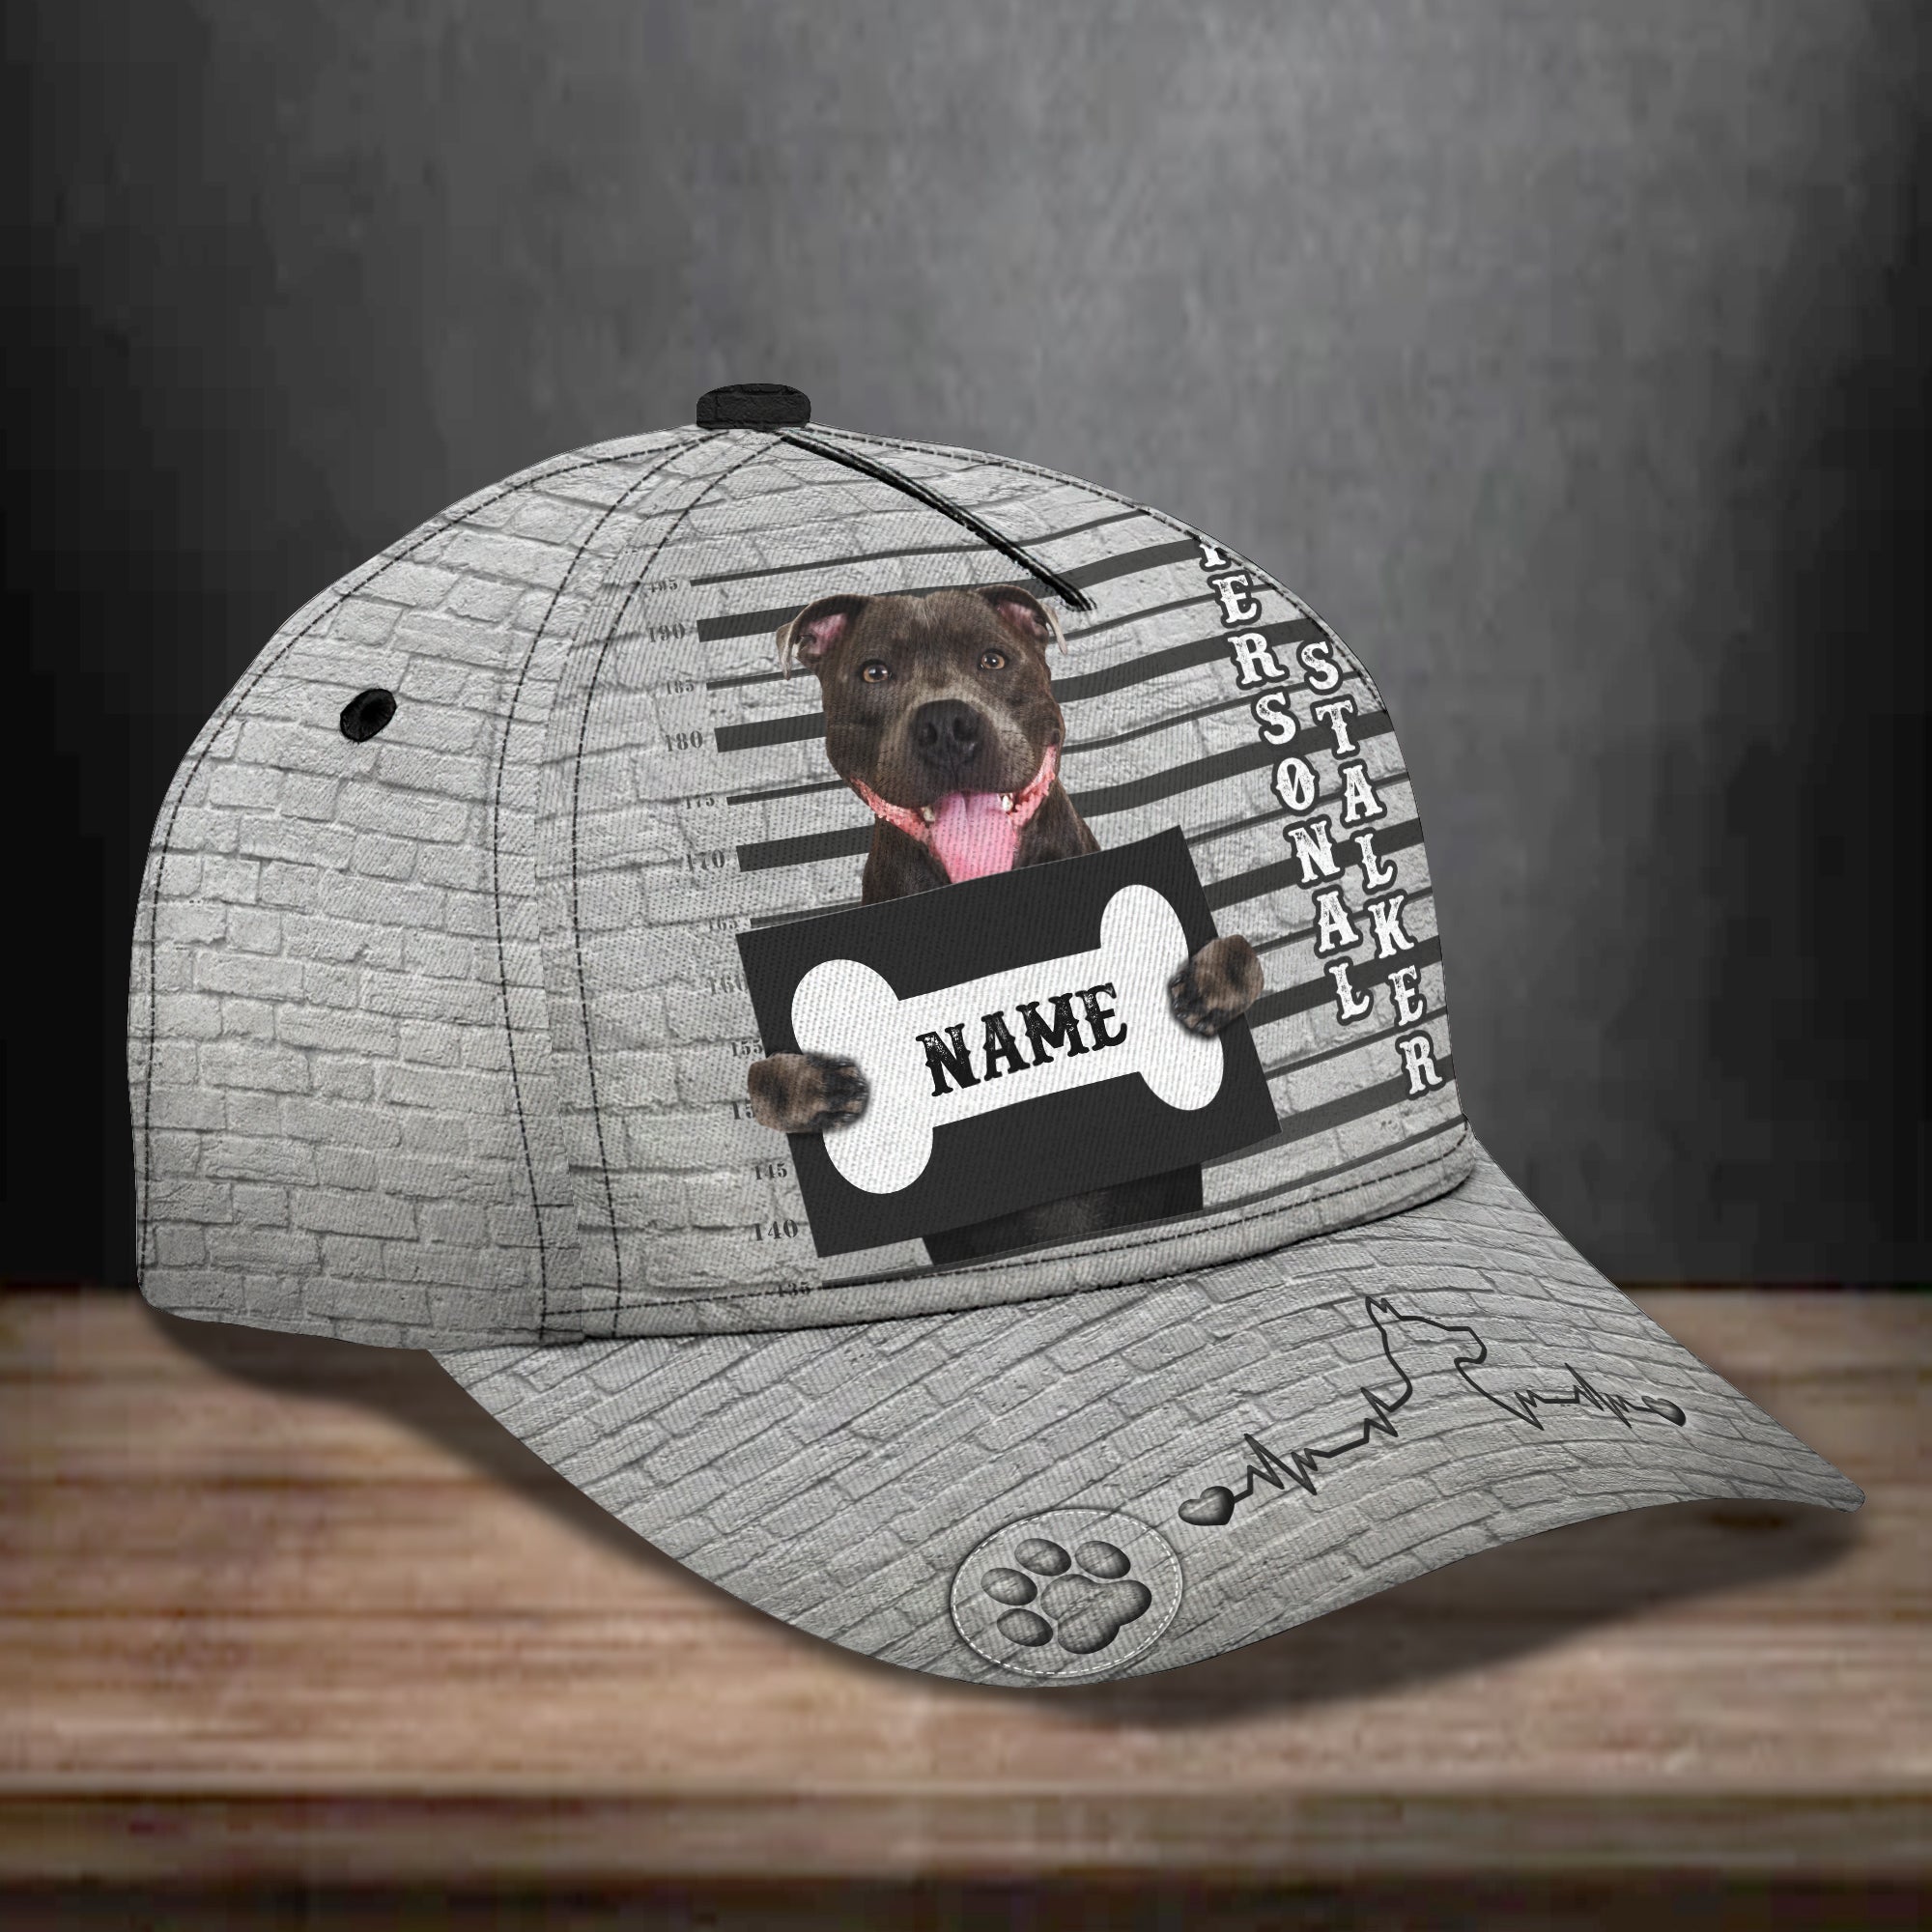 Pitbull - Personalized Name Cap - Nmd 08